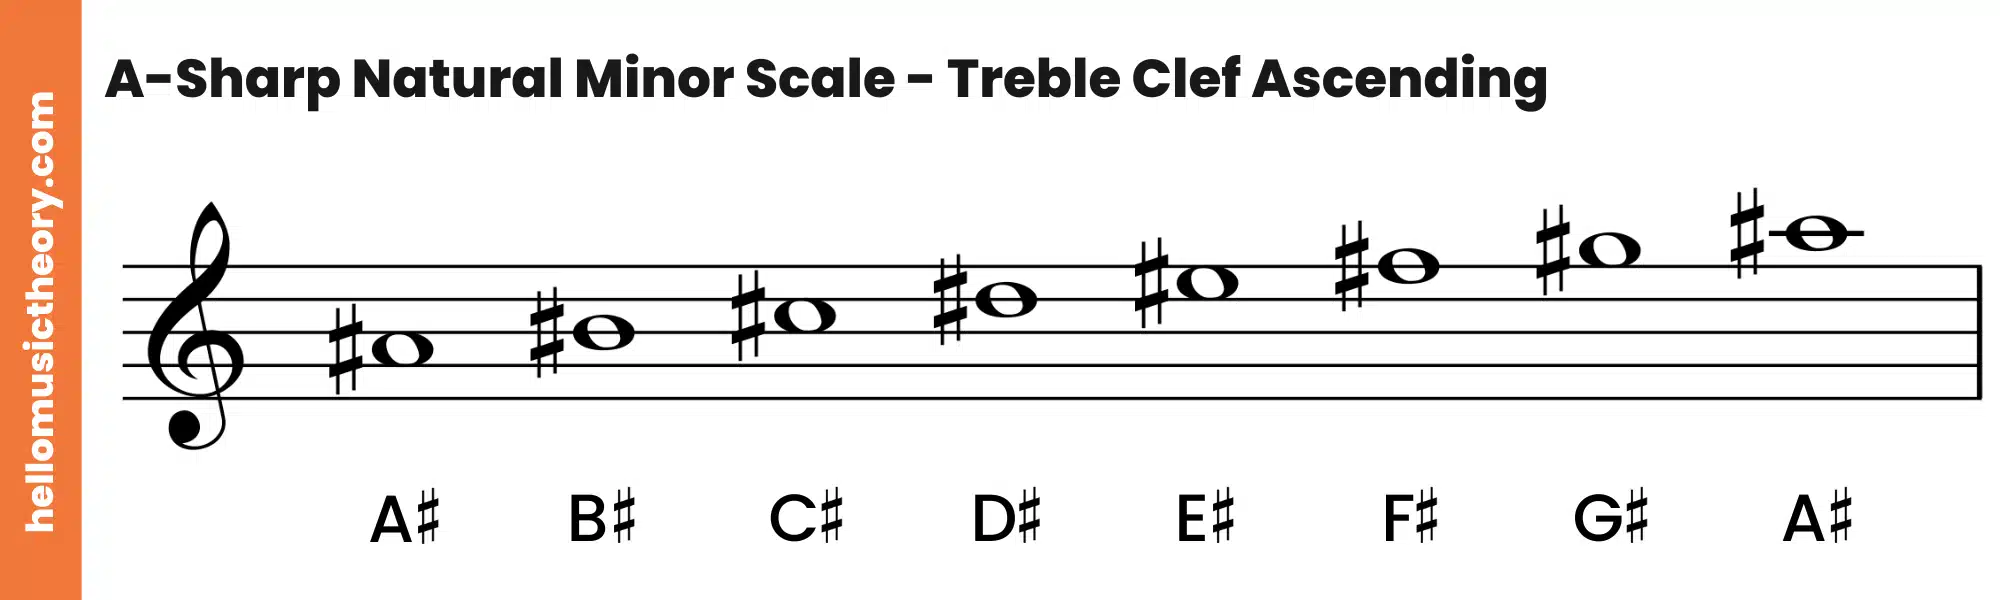 A-Sharp-Natural-Minor-Scale-Treble-Clef-Ascending